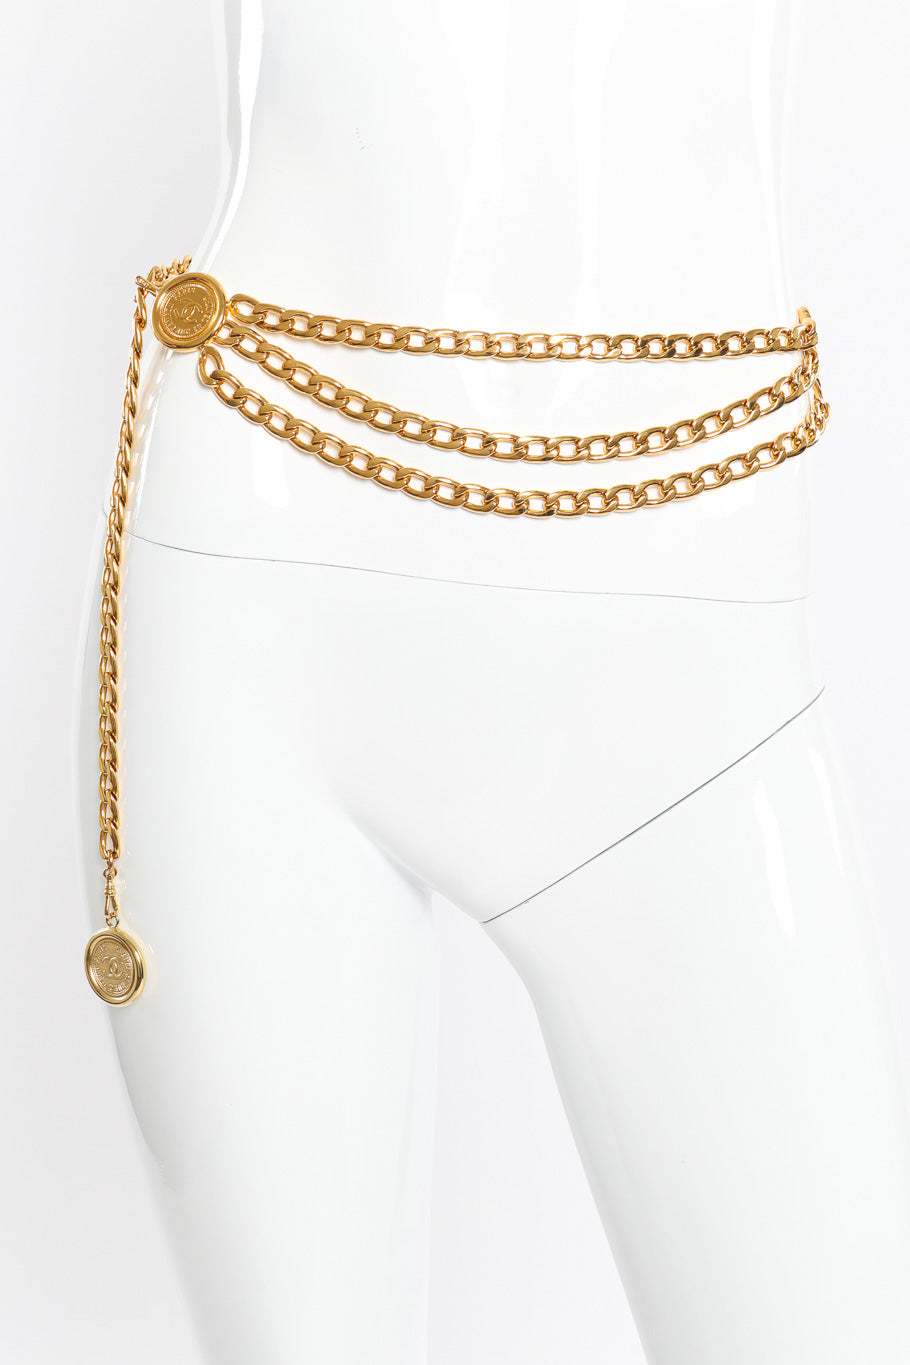 Vintage Chanel Draped Chain Belt on mannequin @Recessla